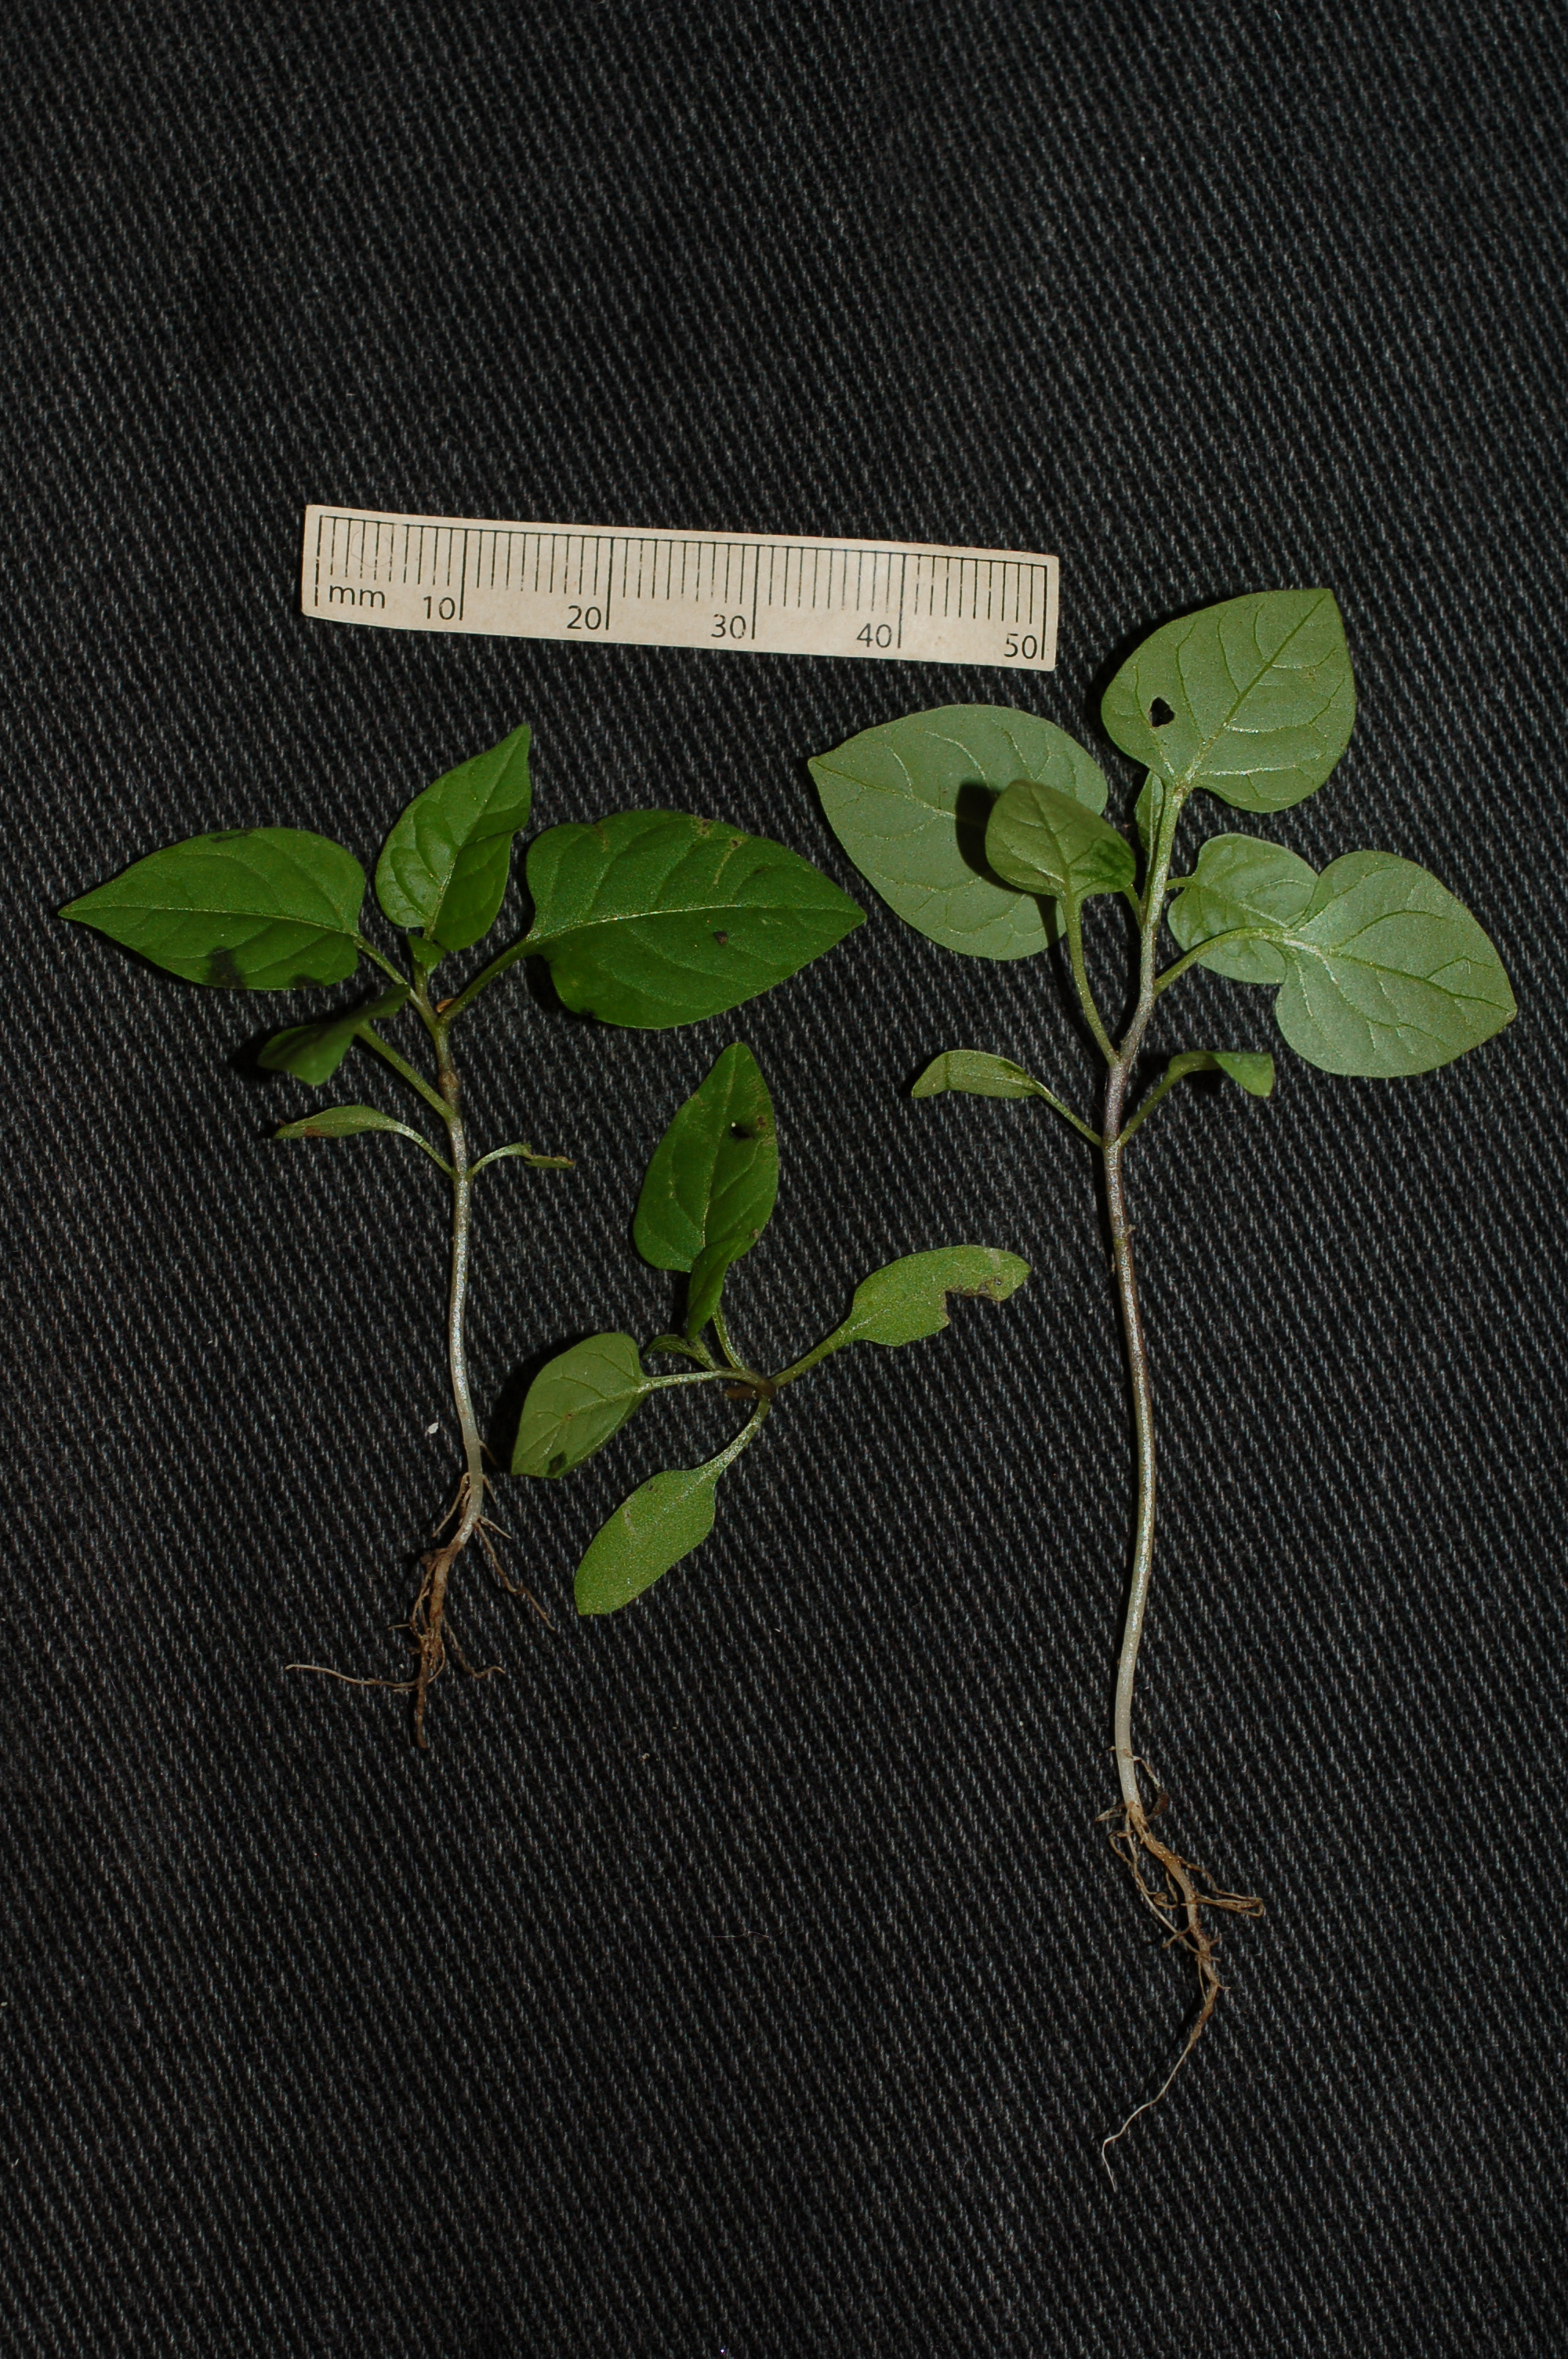 Solanum dulc seedling 1